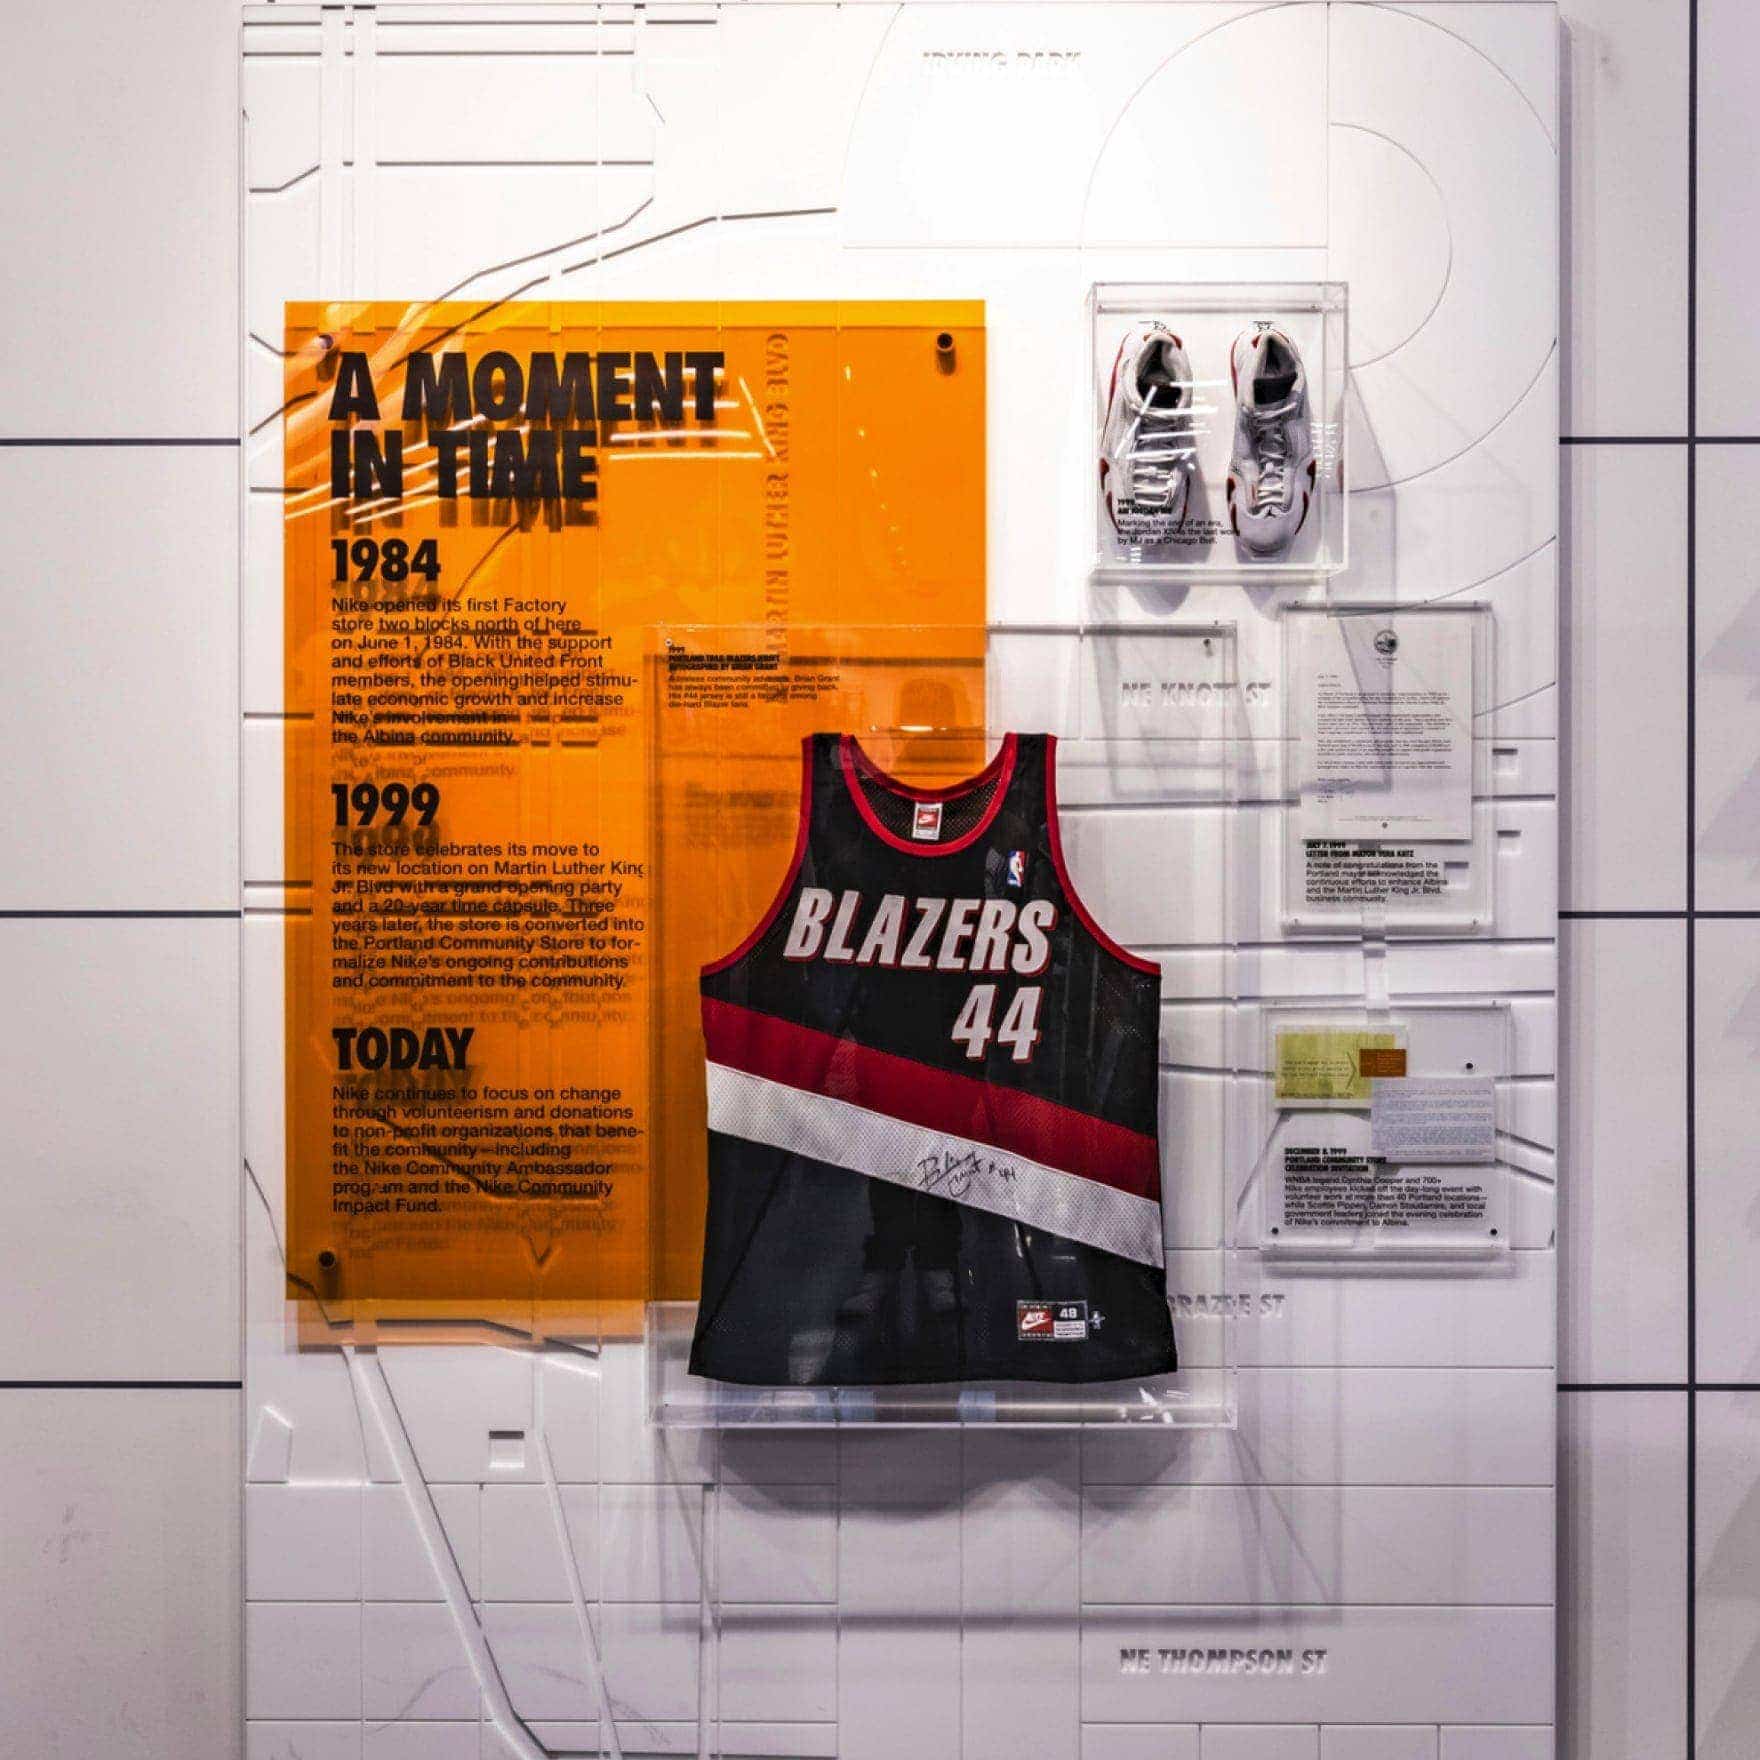 Plausible Gigante seguro Nike Community Store - Detroit. Detroit, MI. Nike.com